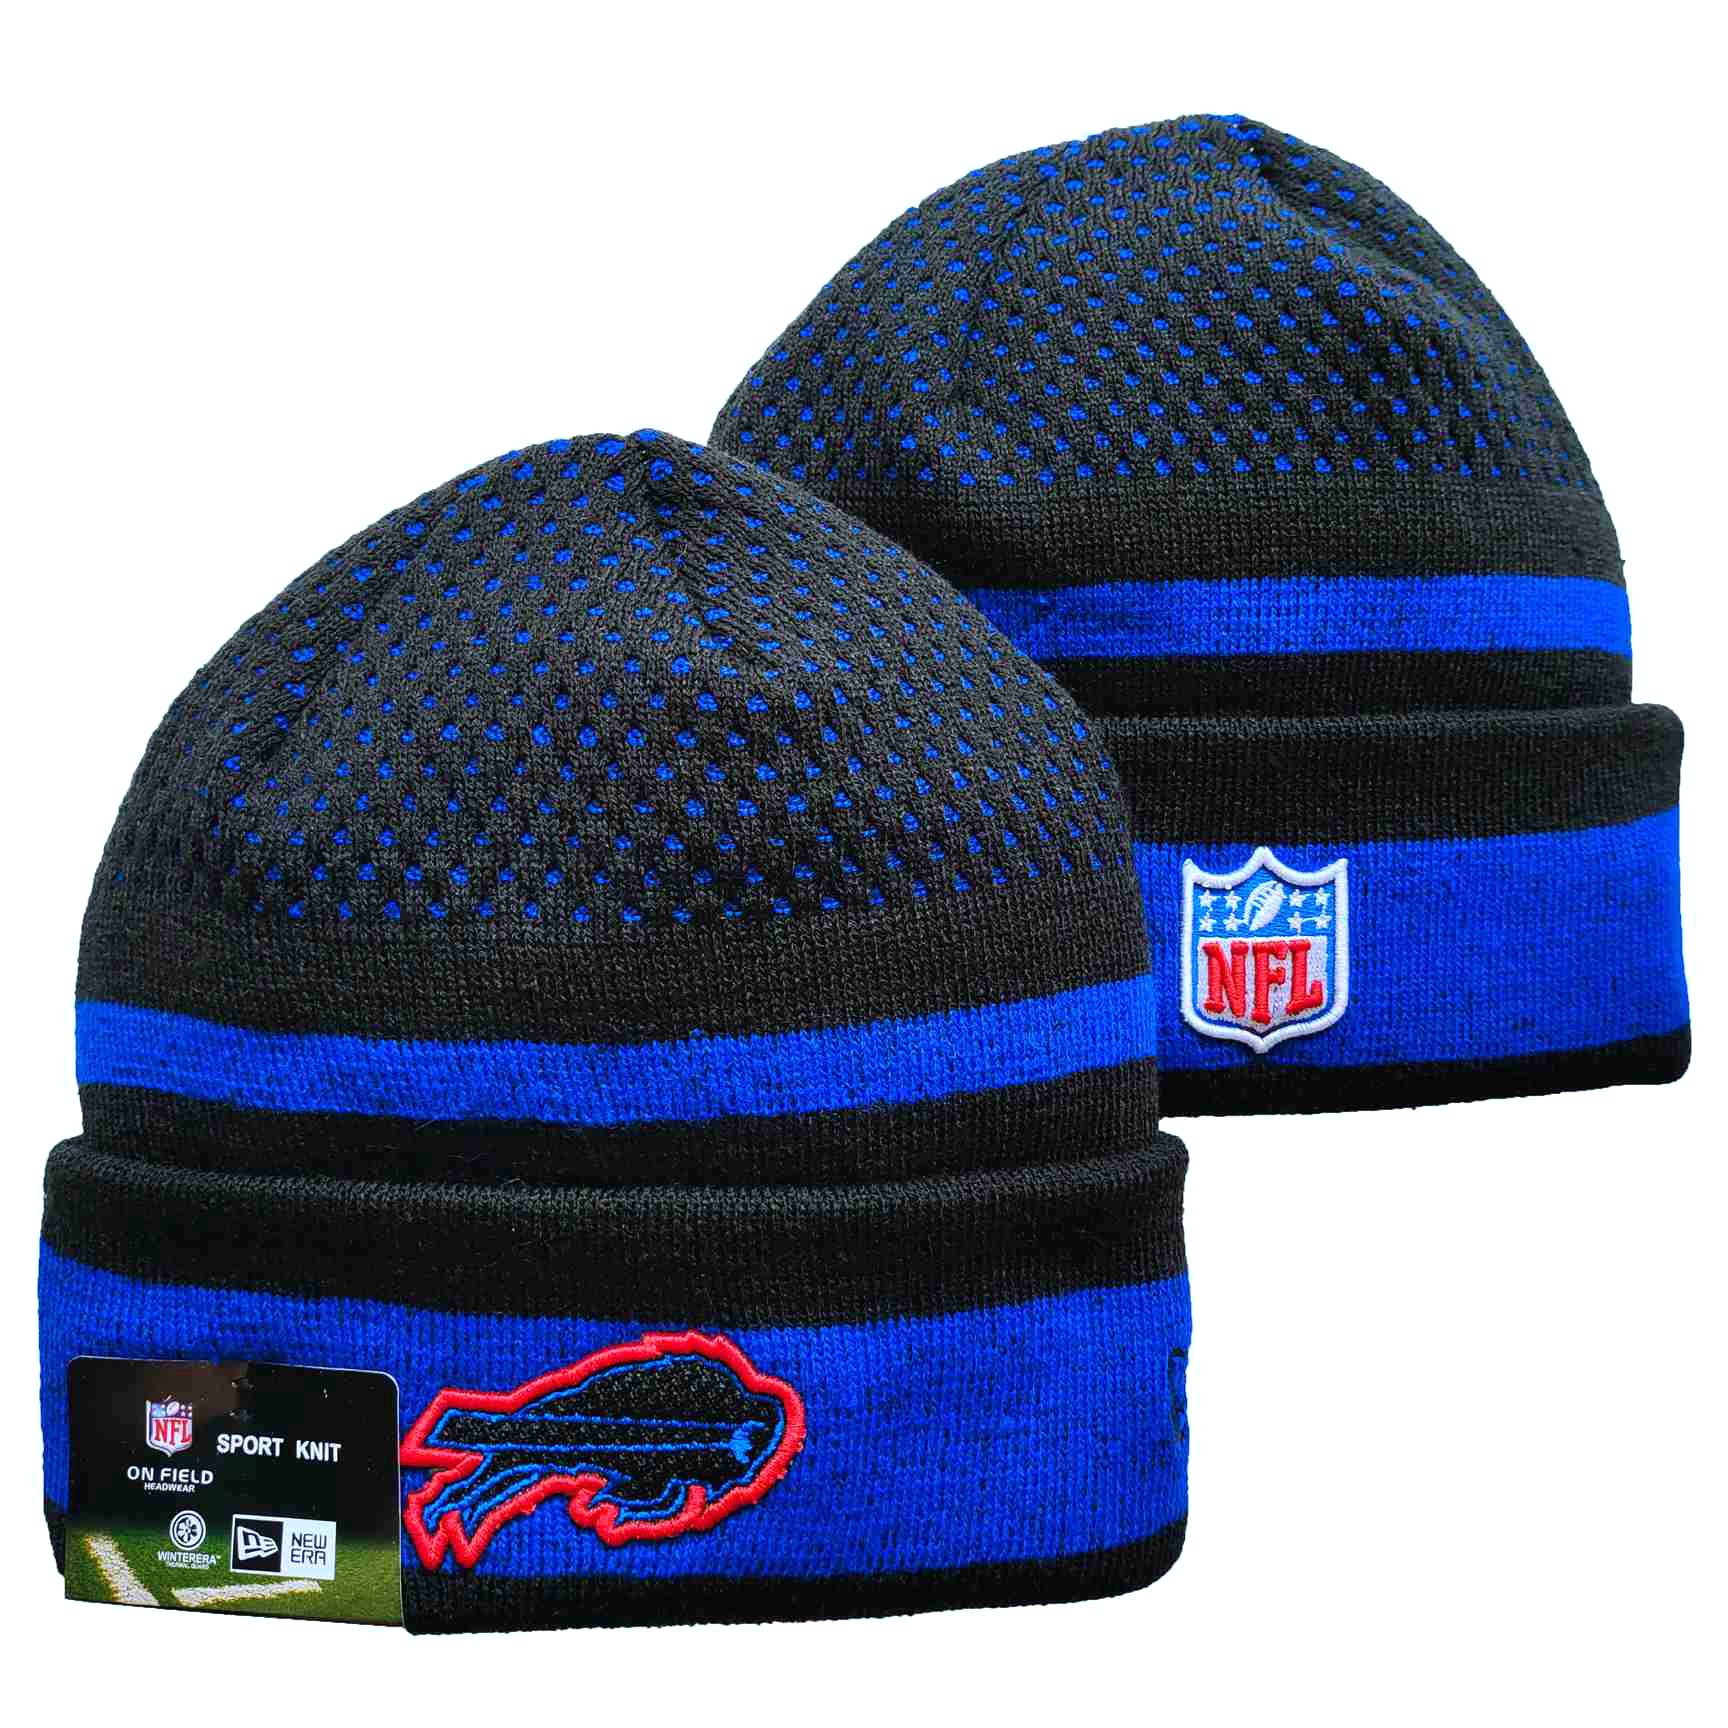 NFL Buffalo Bills Beanies Knit Hats-YD922